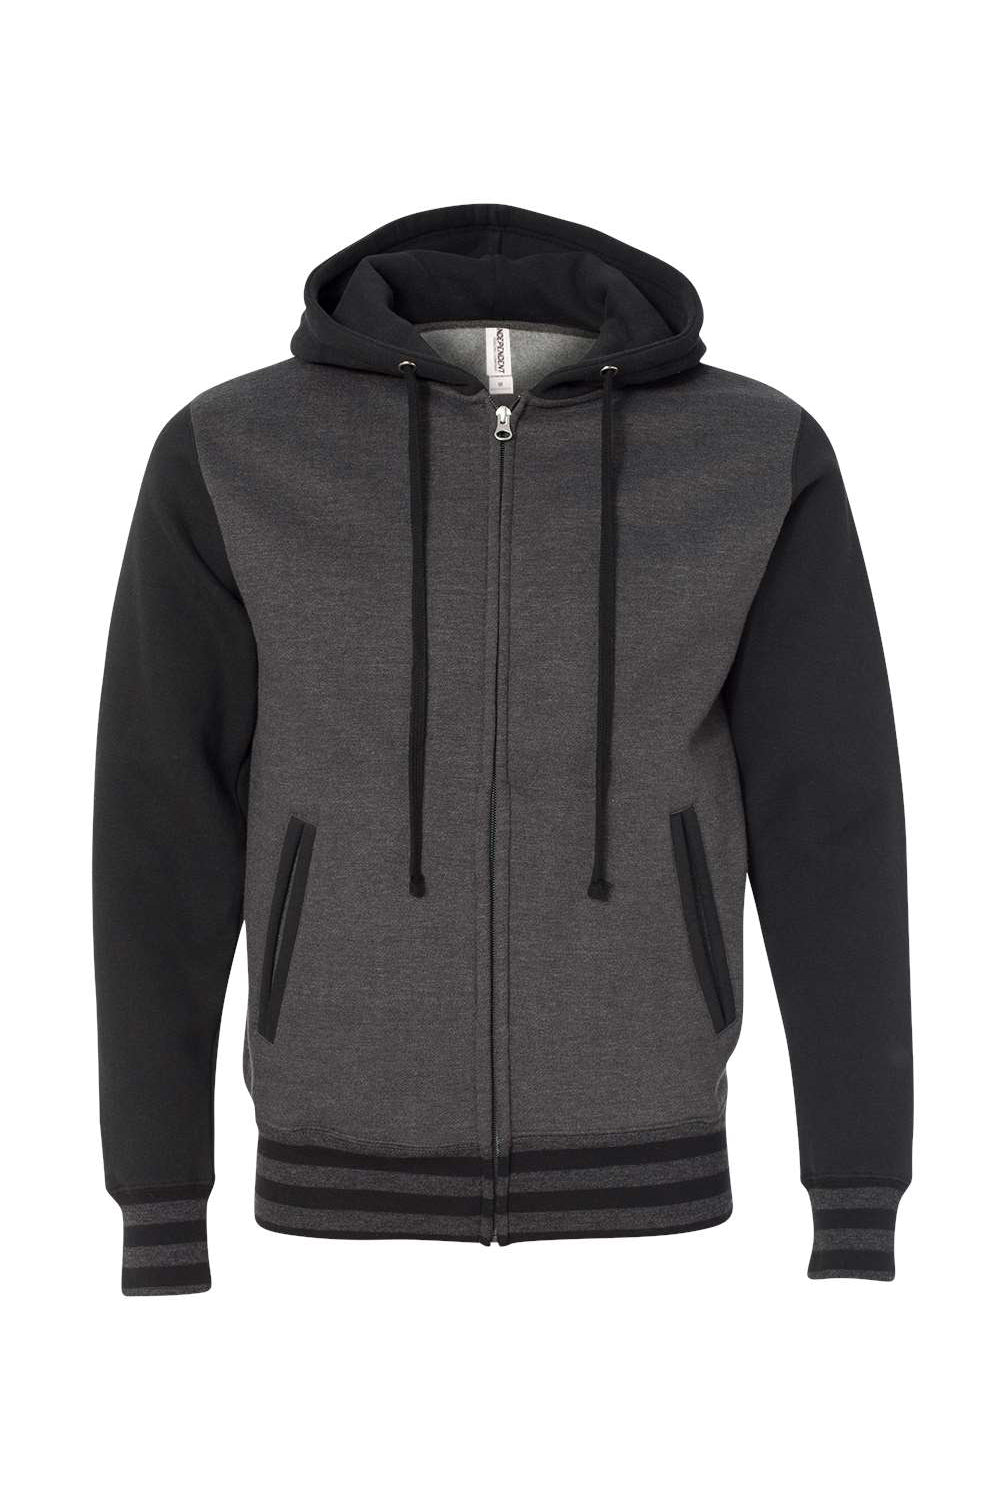 Independent Trading Co. IND45UVZ Mens Varsity Full Zip Hooded Sweatshirt Hoodie Heather Charcoal Grey/Black Flat Front